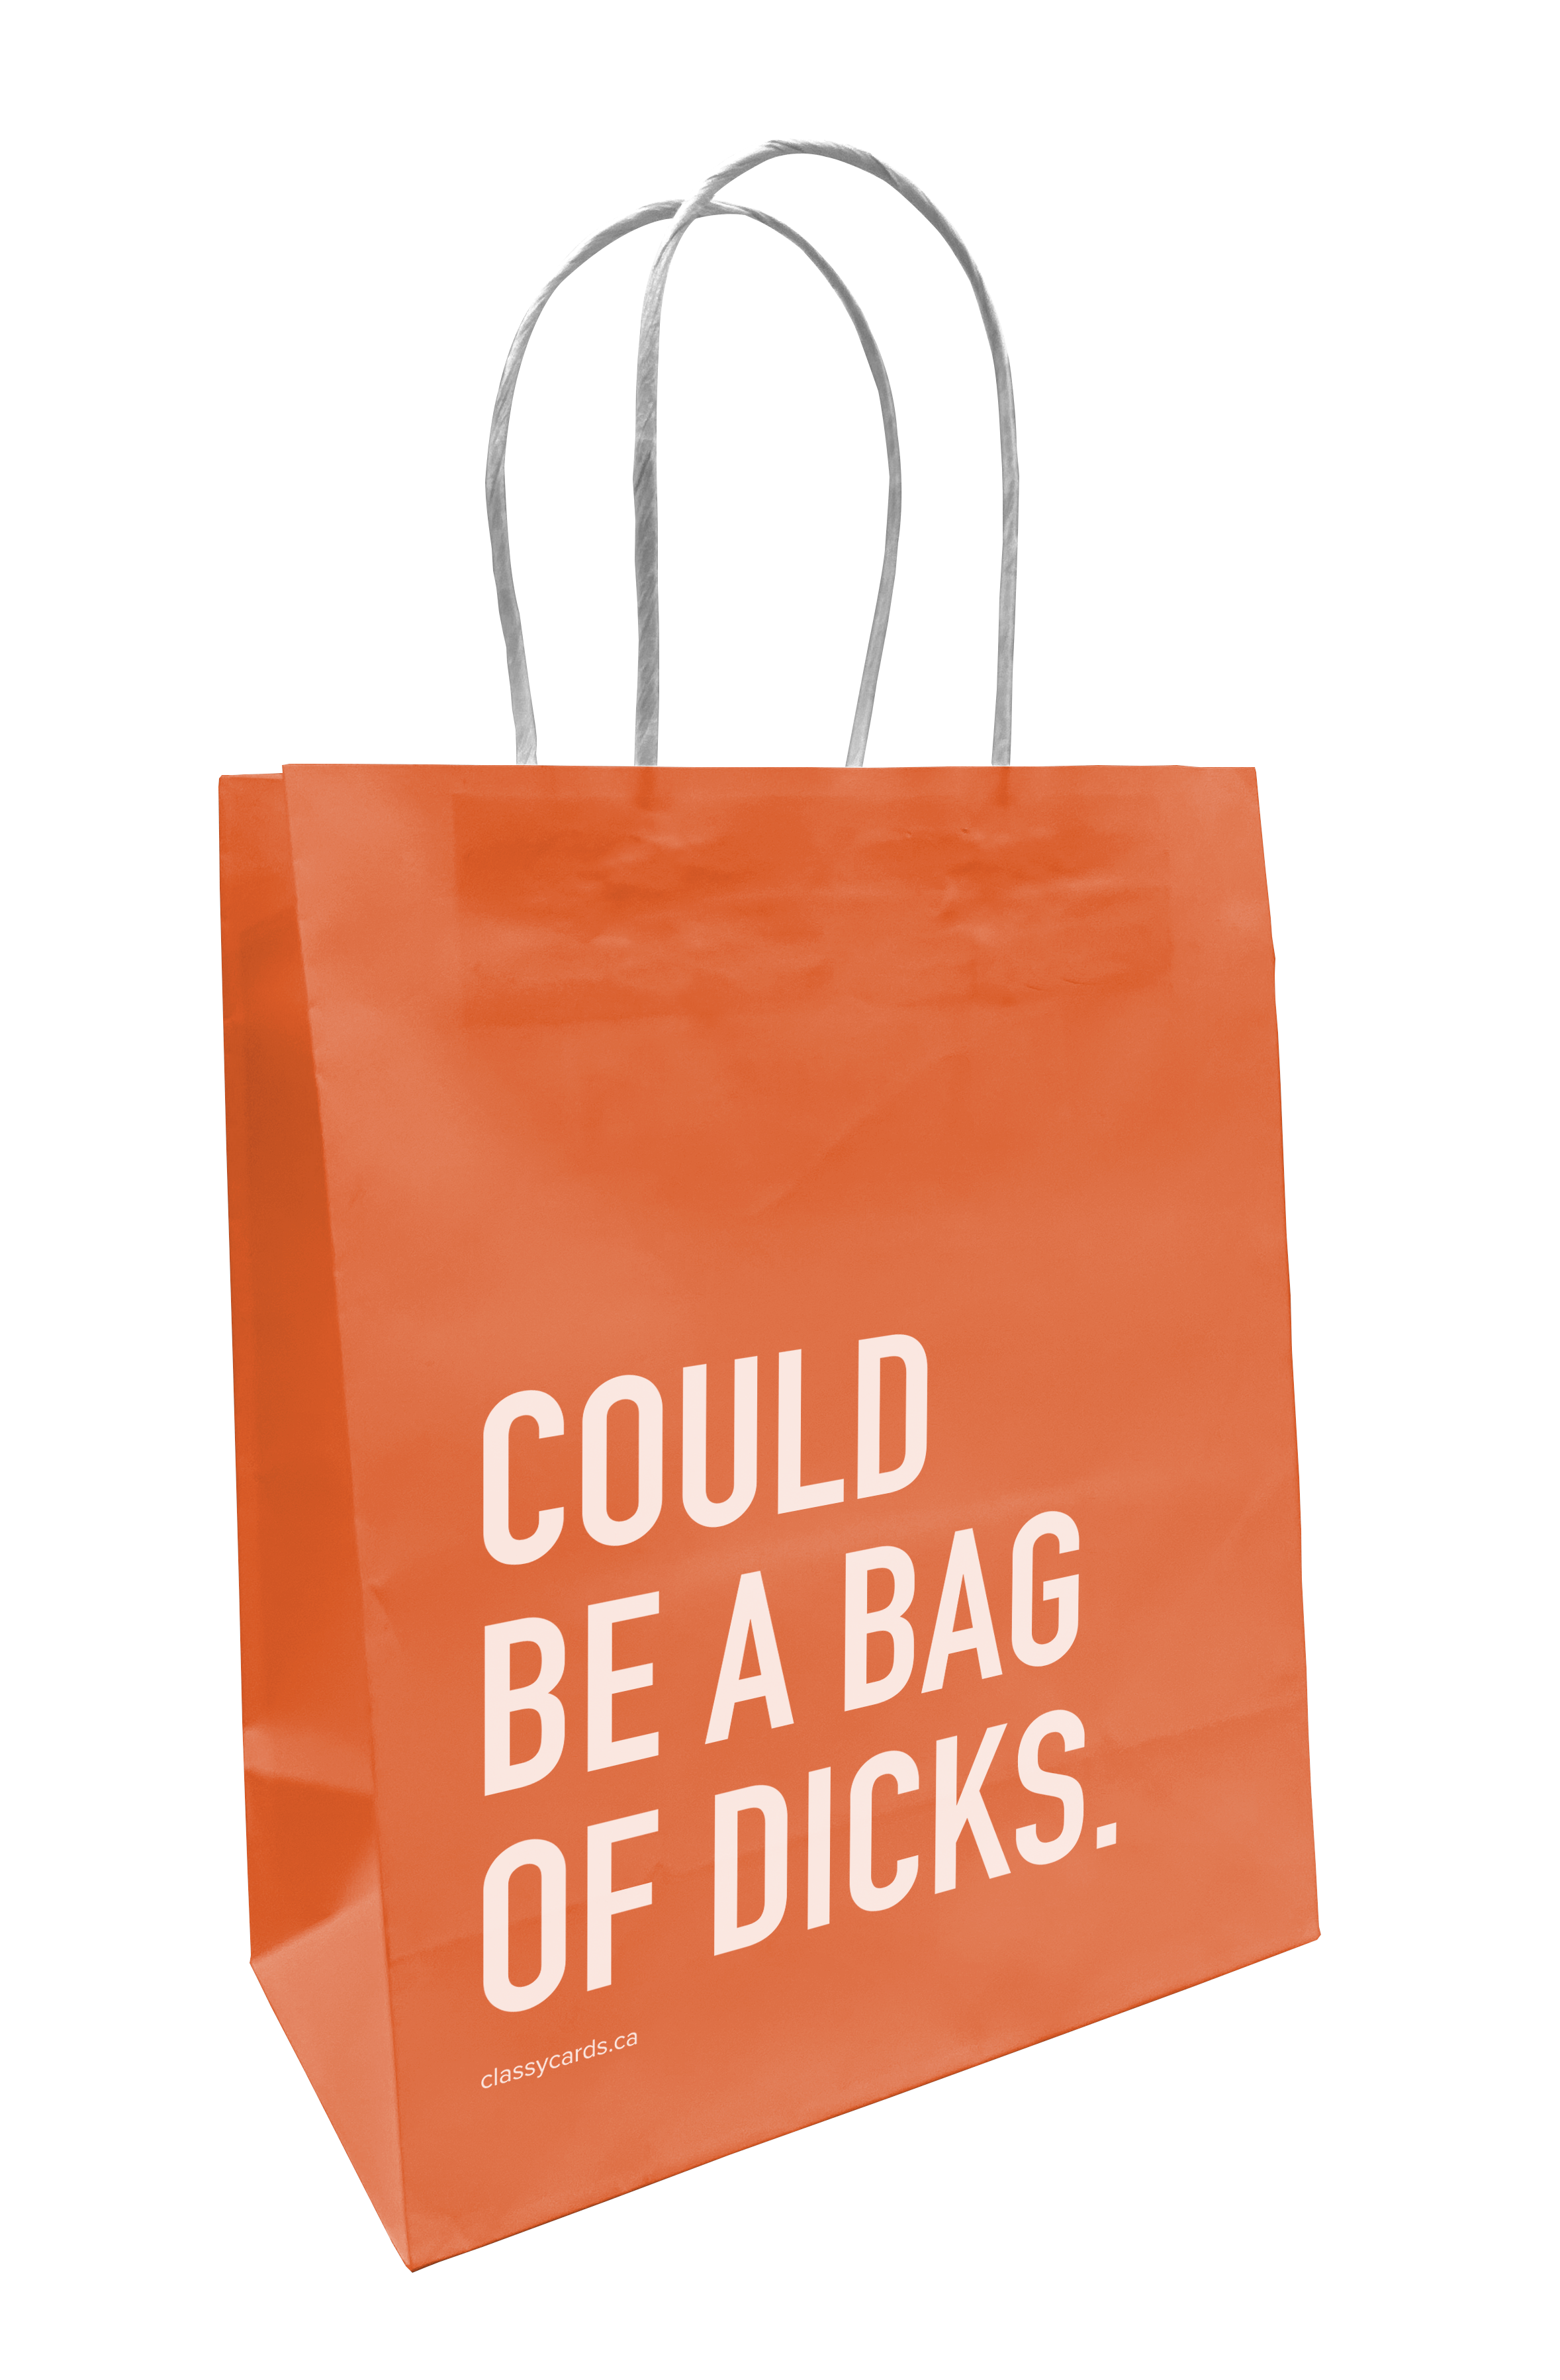 Bag of Dicks Gift Bag